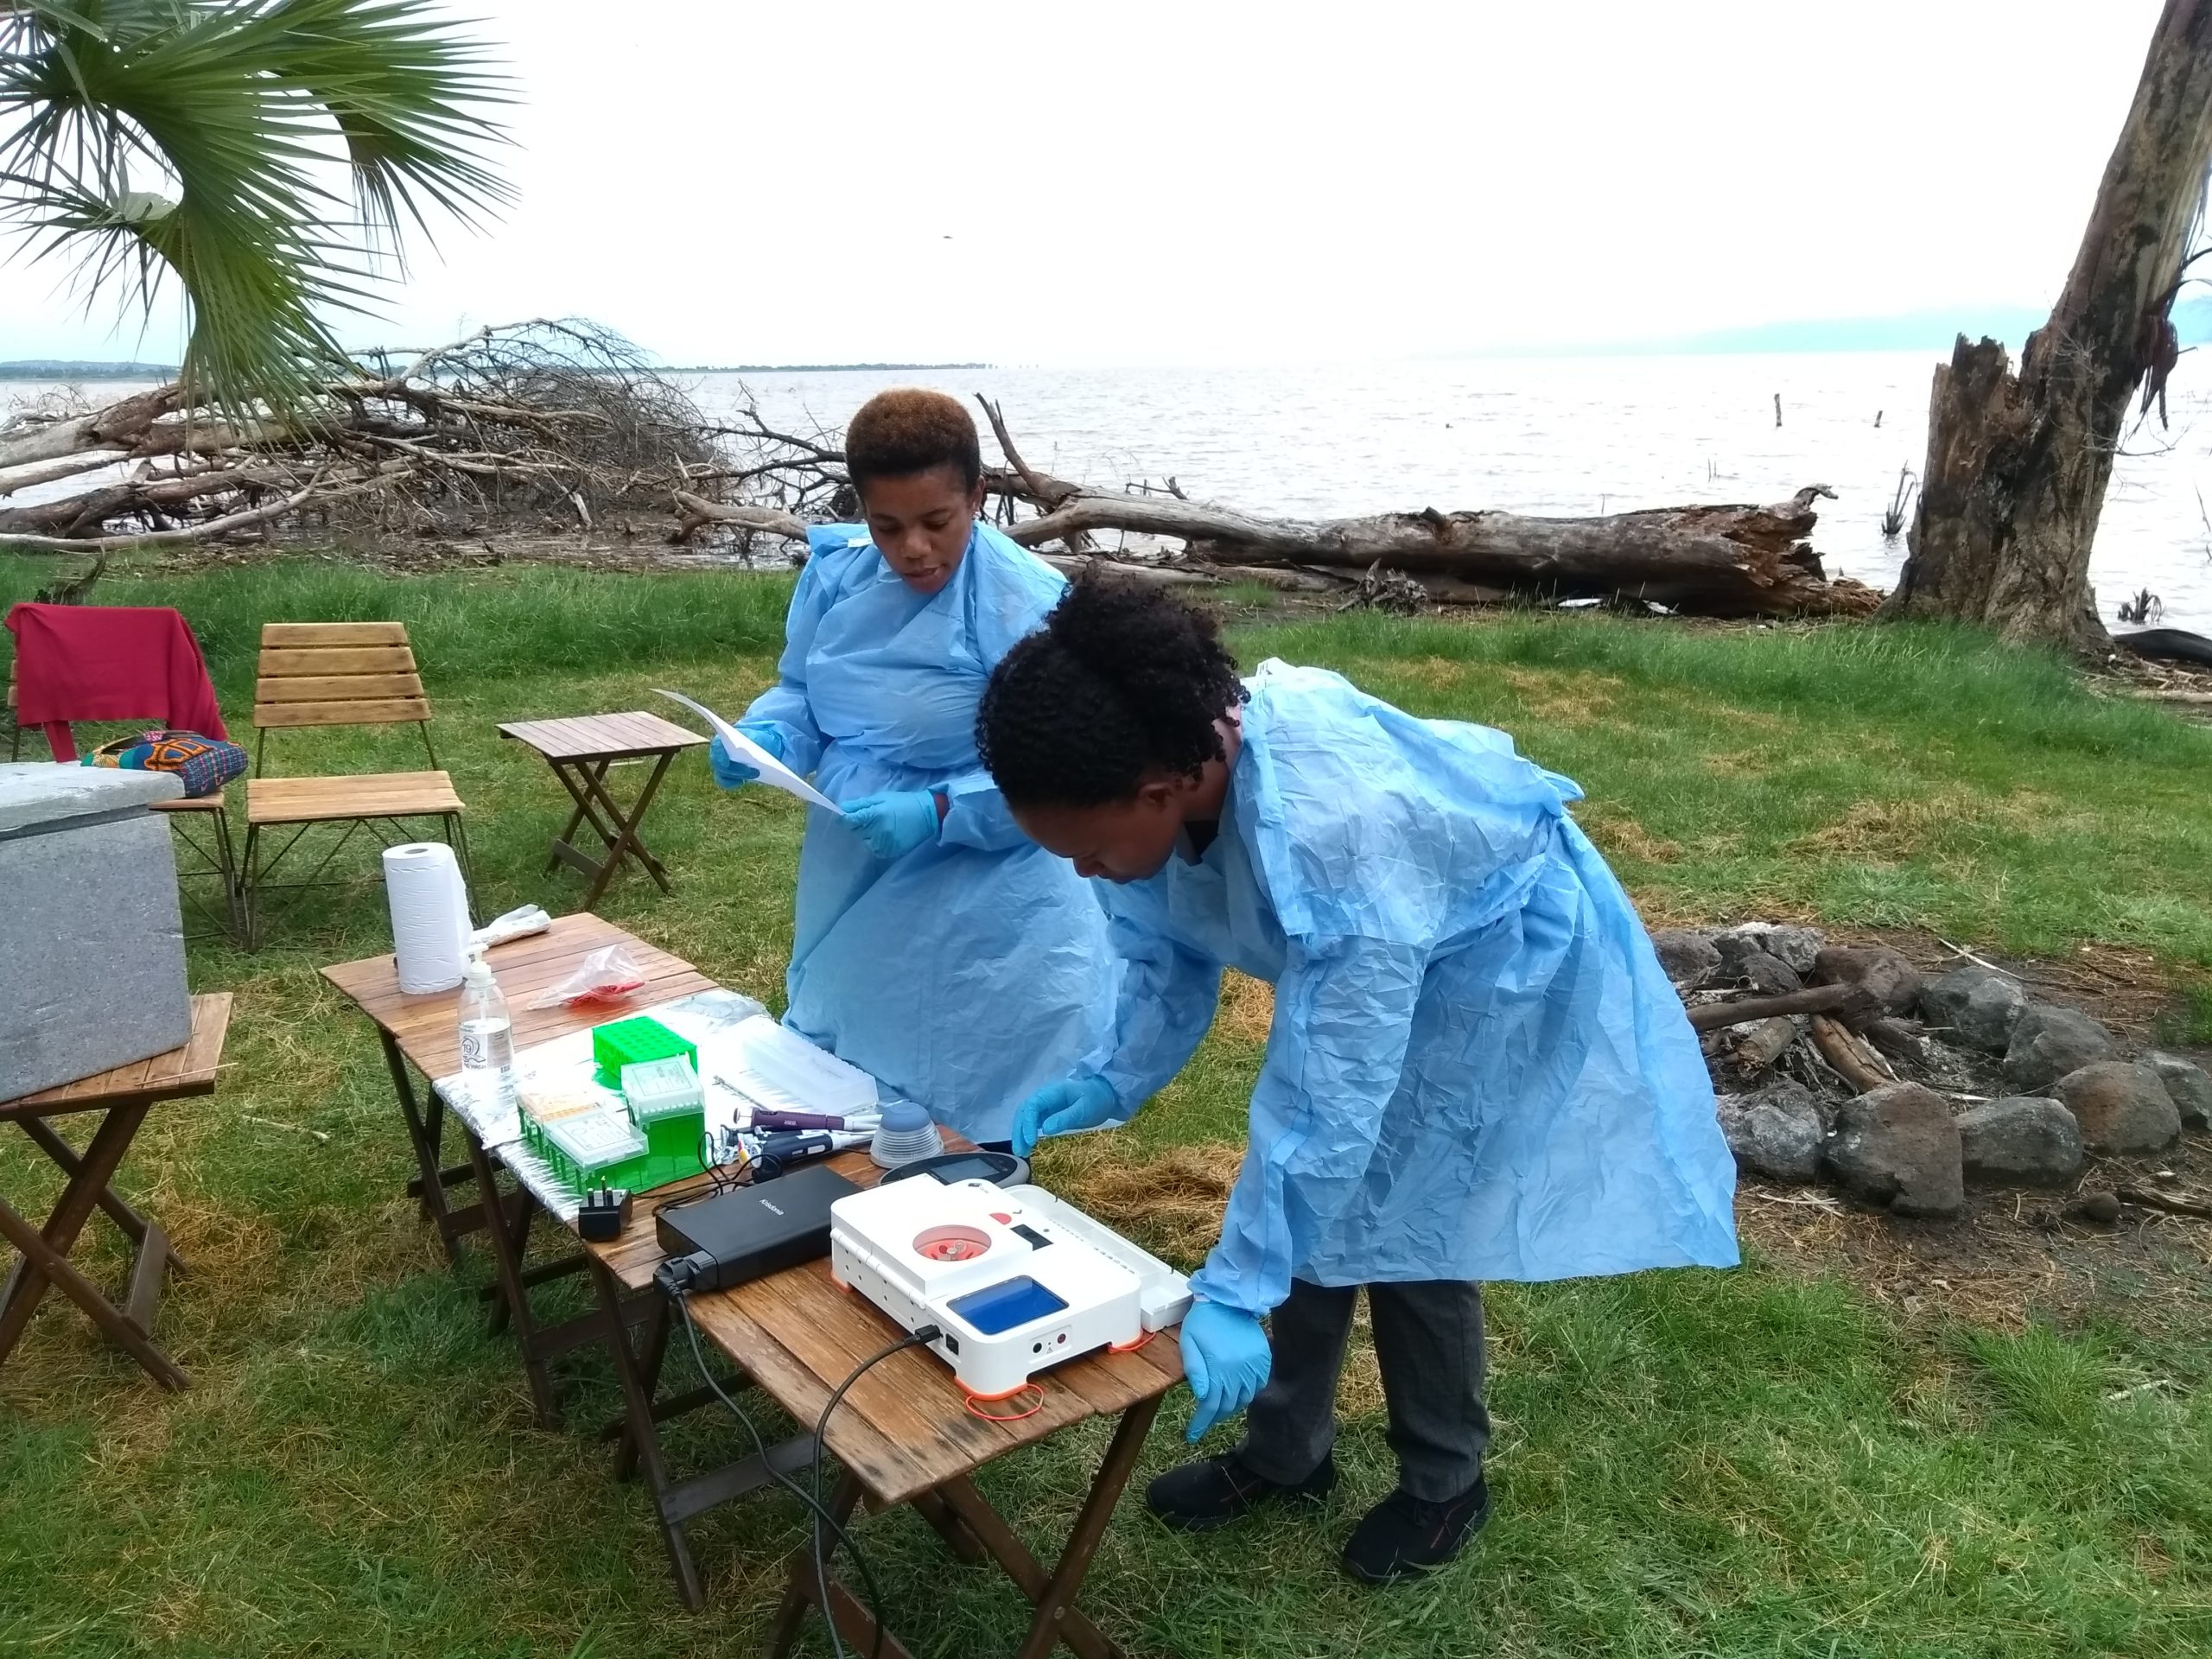 Field sequencing lab for aquaculture AMR study, Lake Eyasi, Tanzania. Credit: Marco van Zwetselaar CC BY-SA 4.0.